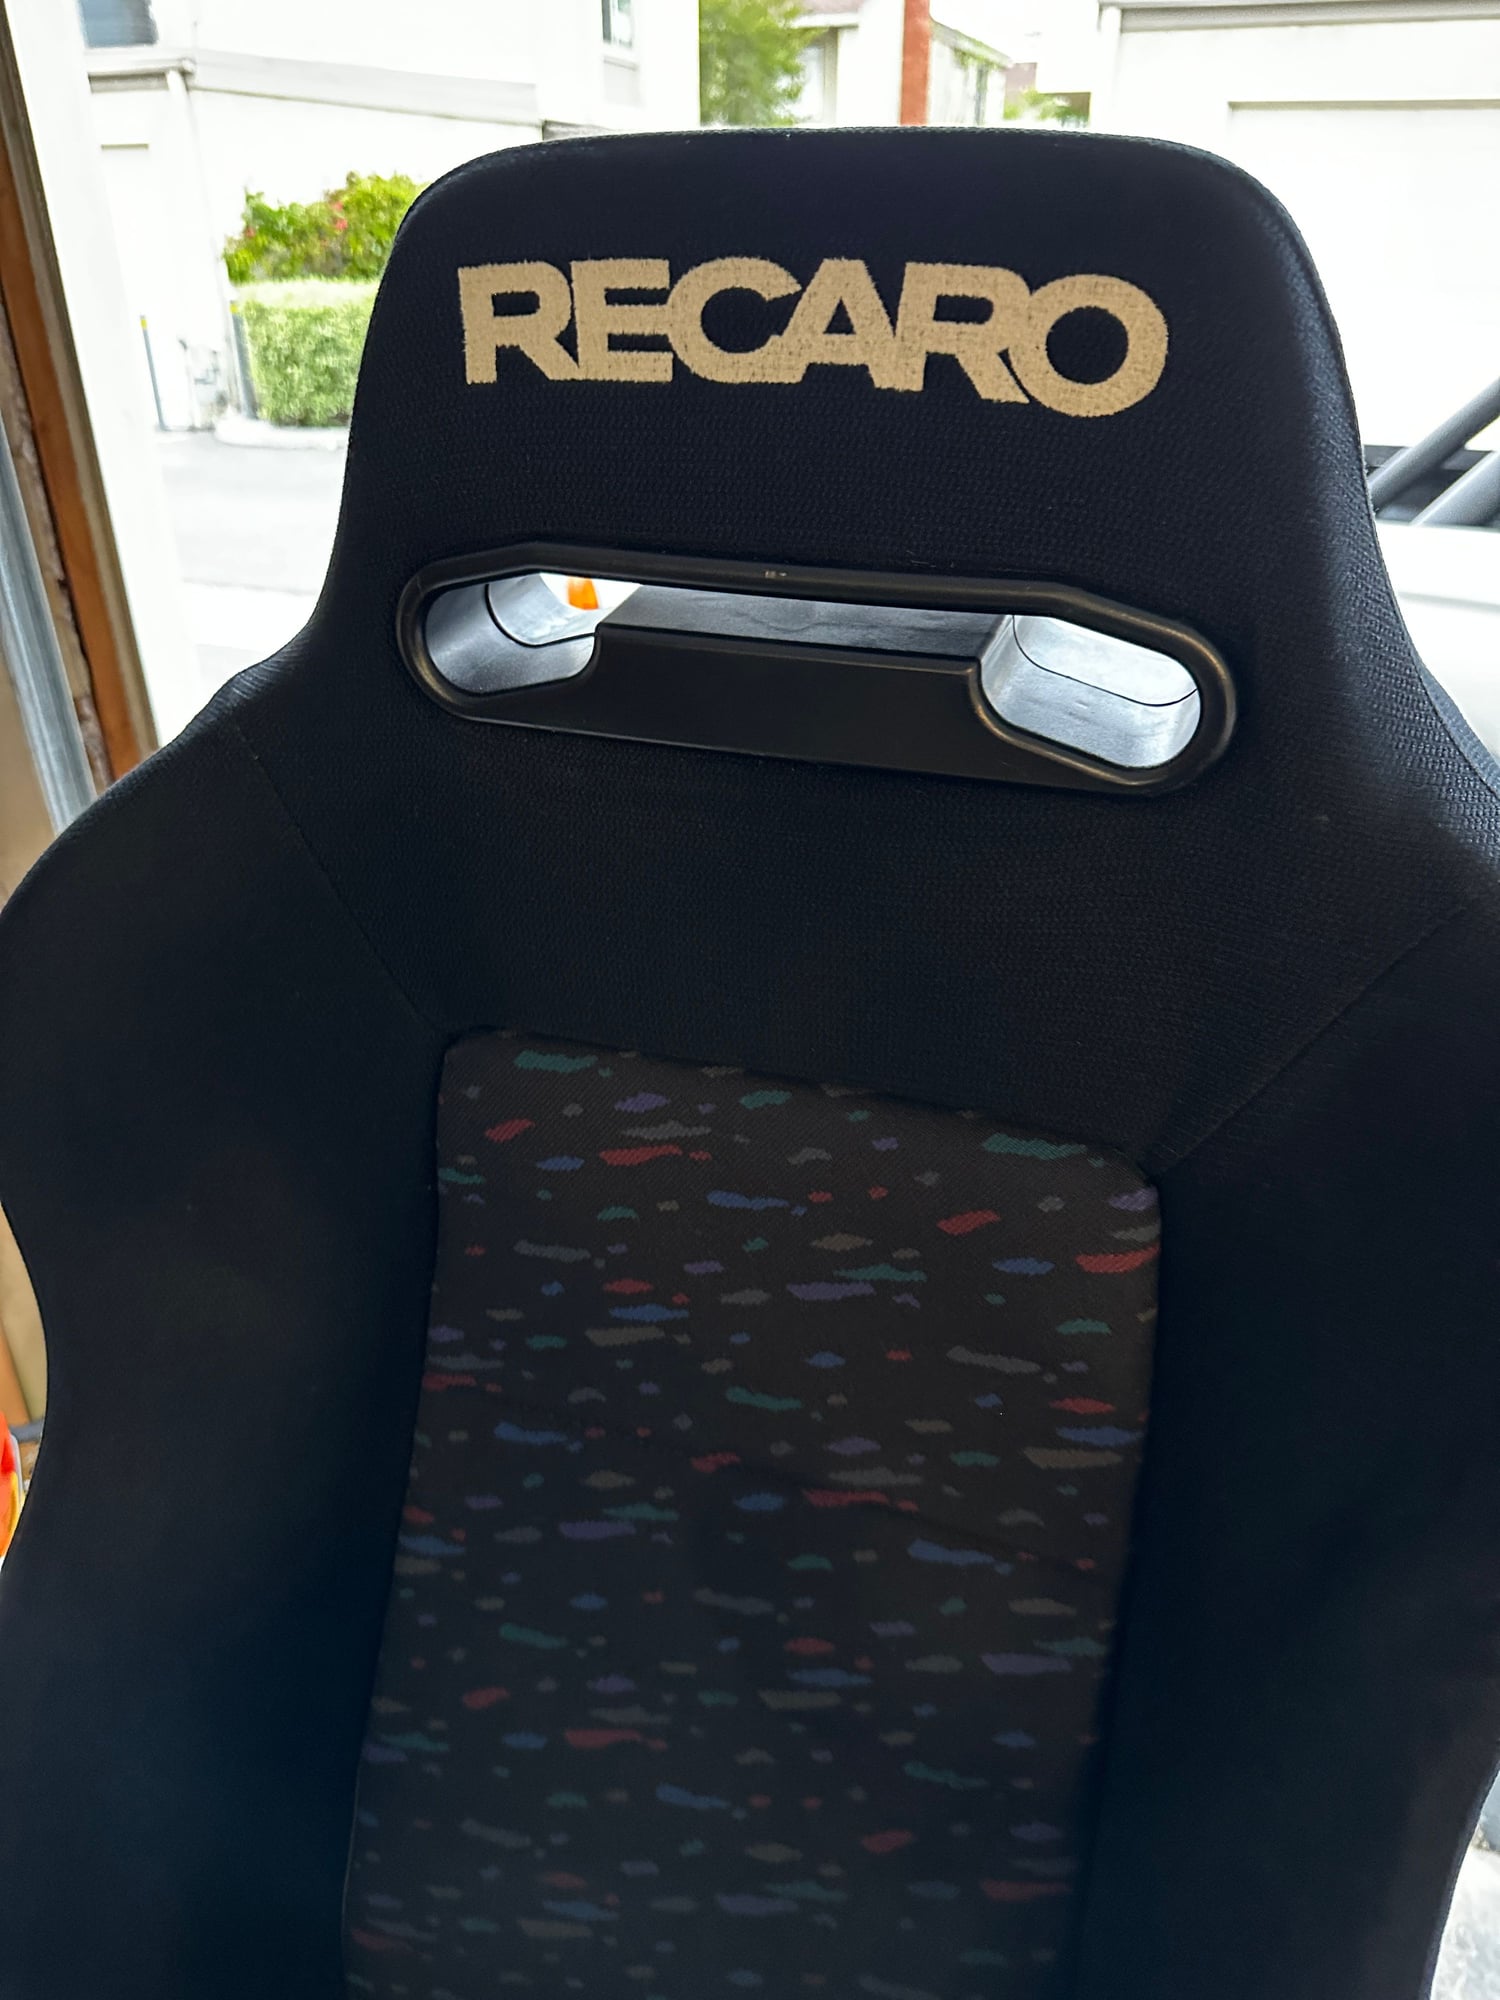 Interior/Upholstery - Recaro Sr2 Le Mans Confetti seats will come with BRIDE Type-RO Rails - Used - 1993 to 1998 Mazda RX-7 - Anaheim, CA 92804, United States